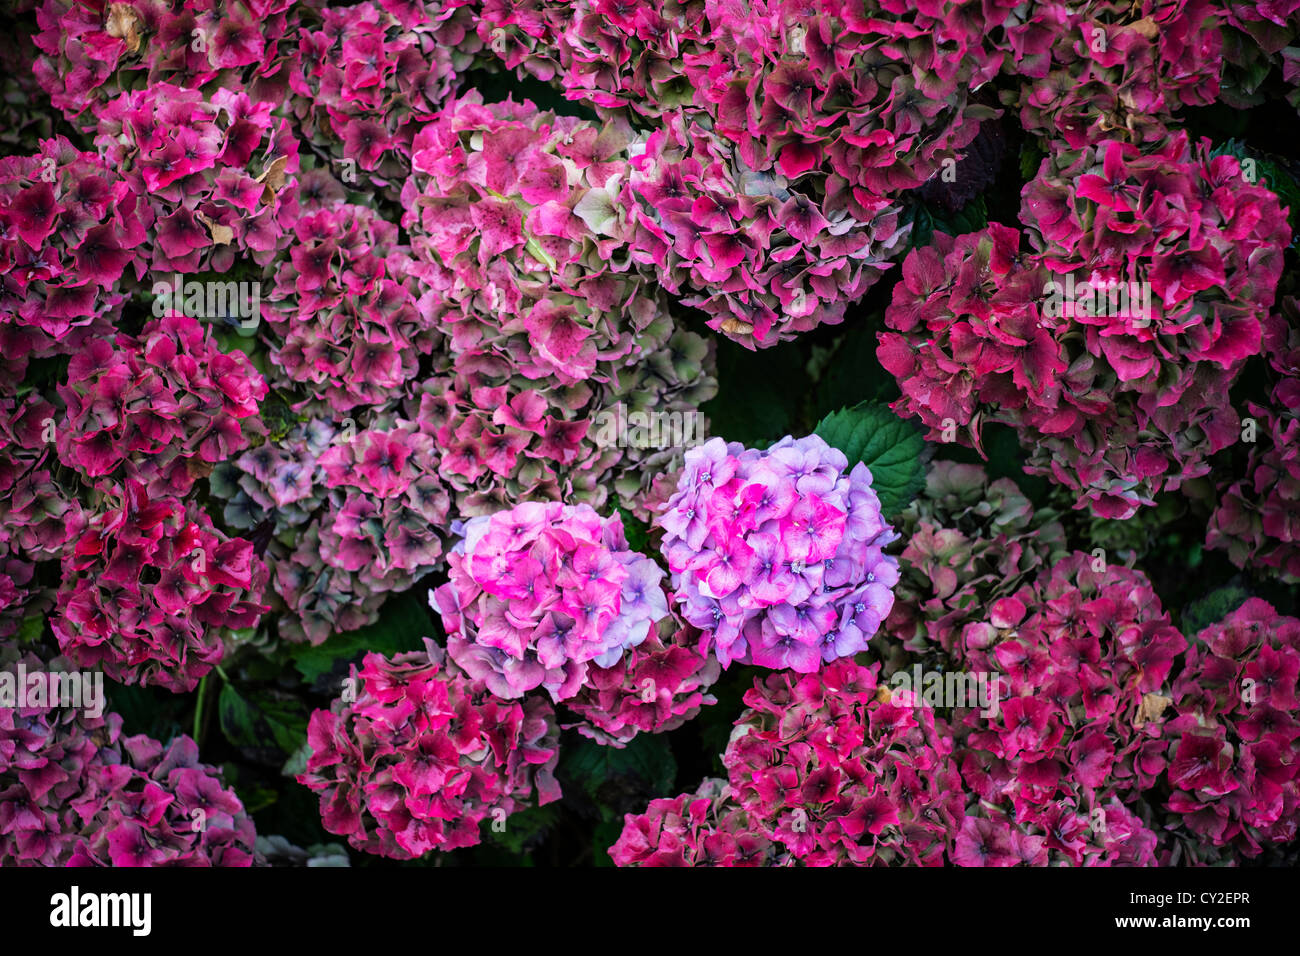 A Hydrangea shrub changing color through the autumn season Stock Photo